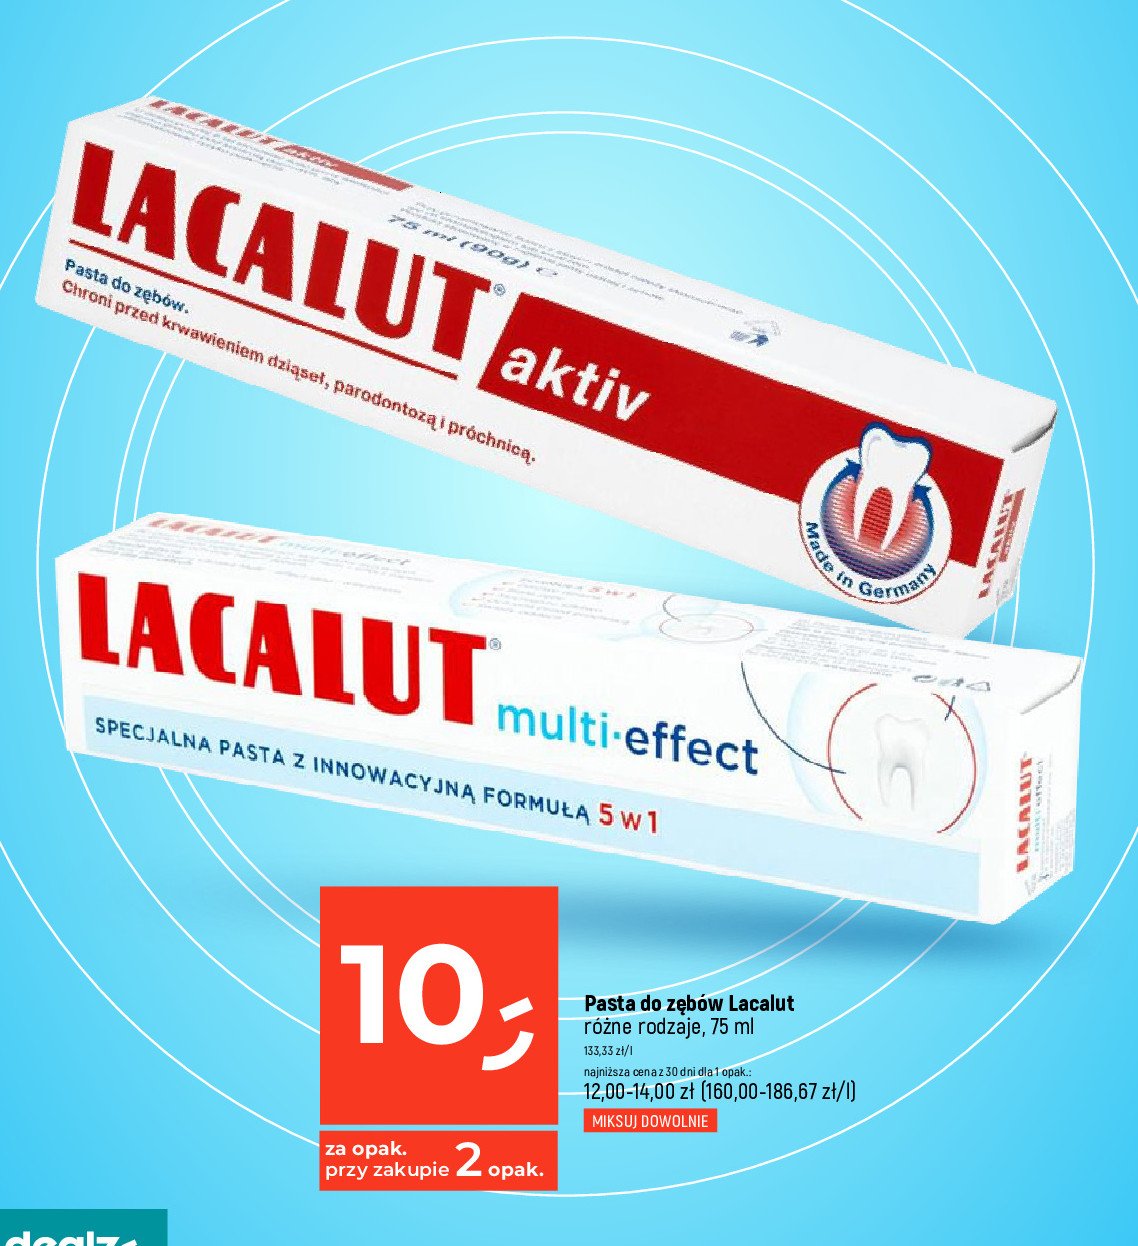 Pasta do zębów Lacalut multi-effect promocja